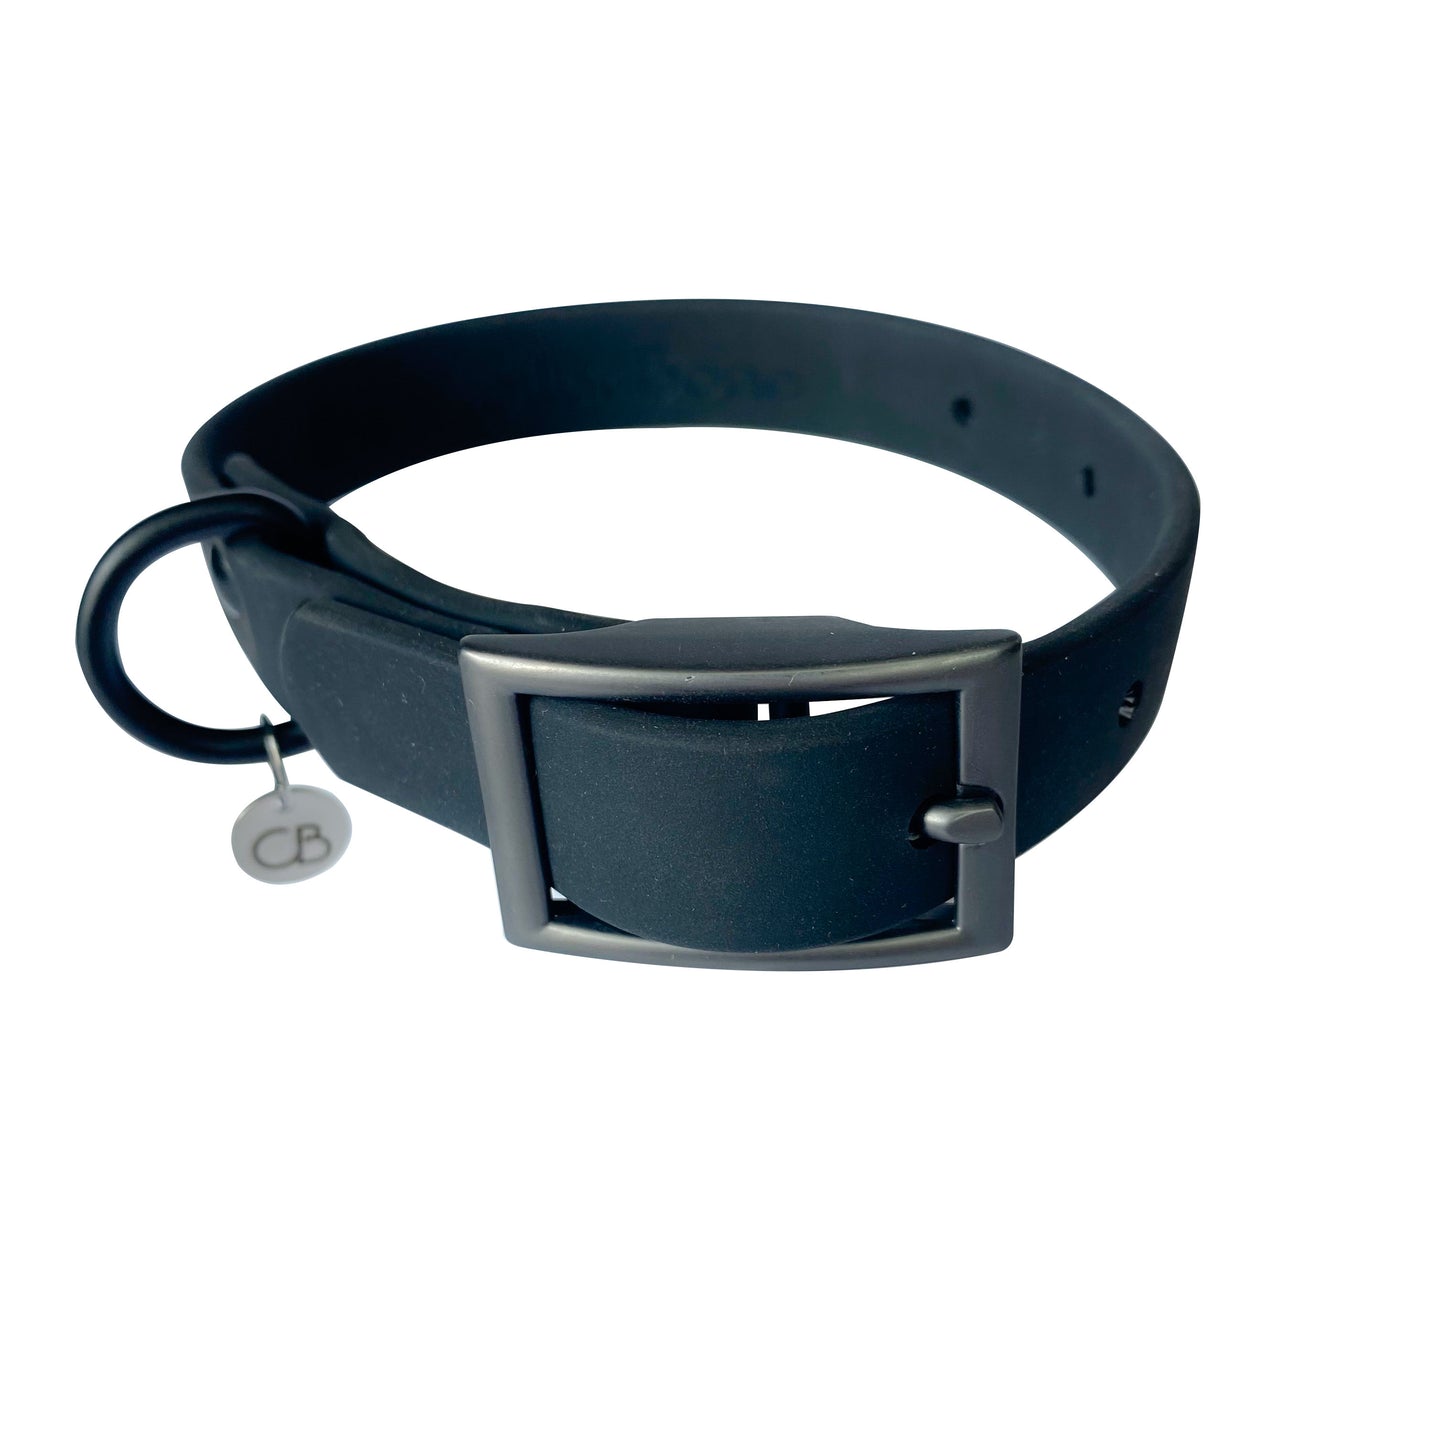 Kanoé Waterproof Dog Collar in Black